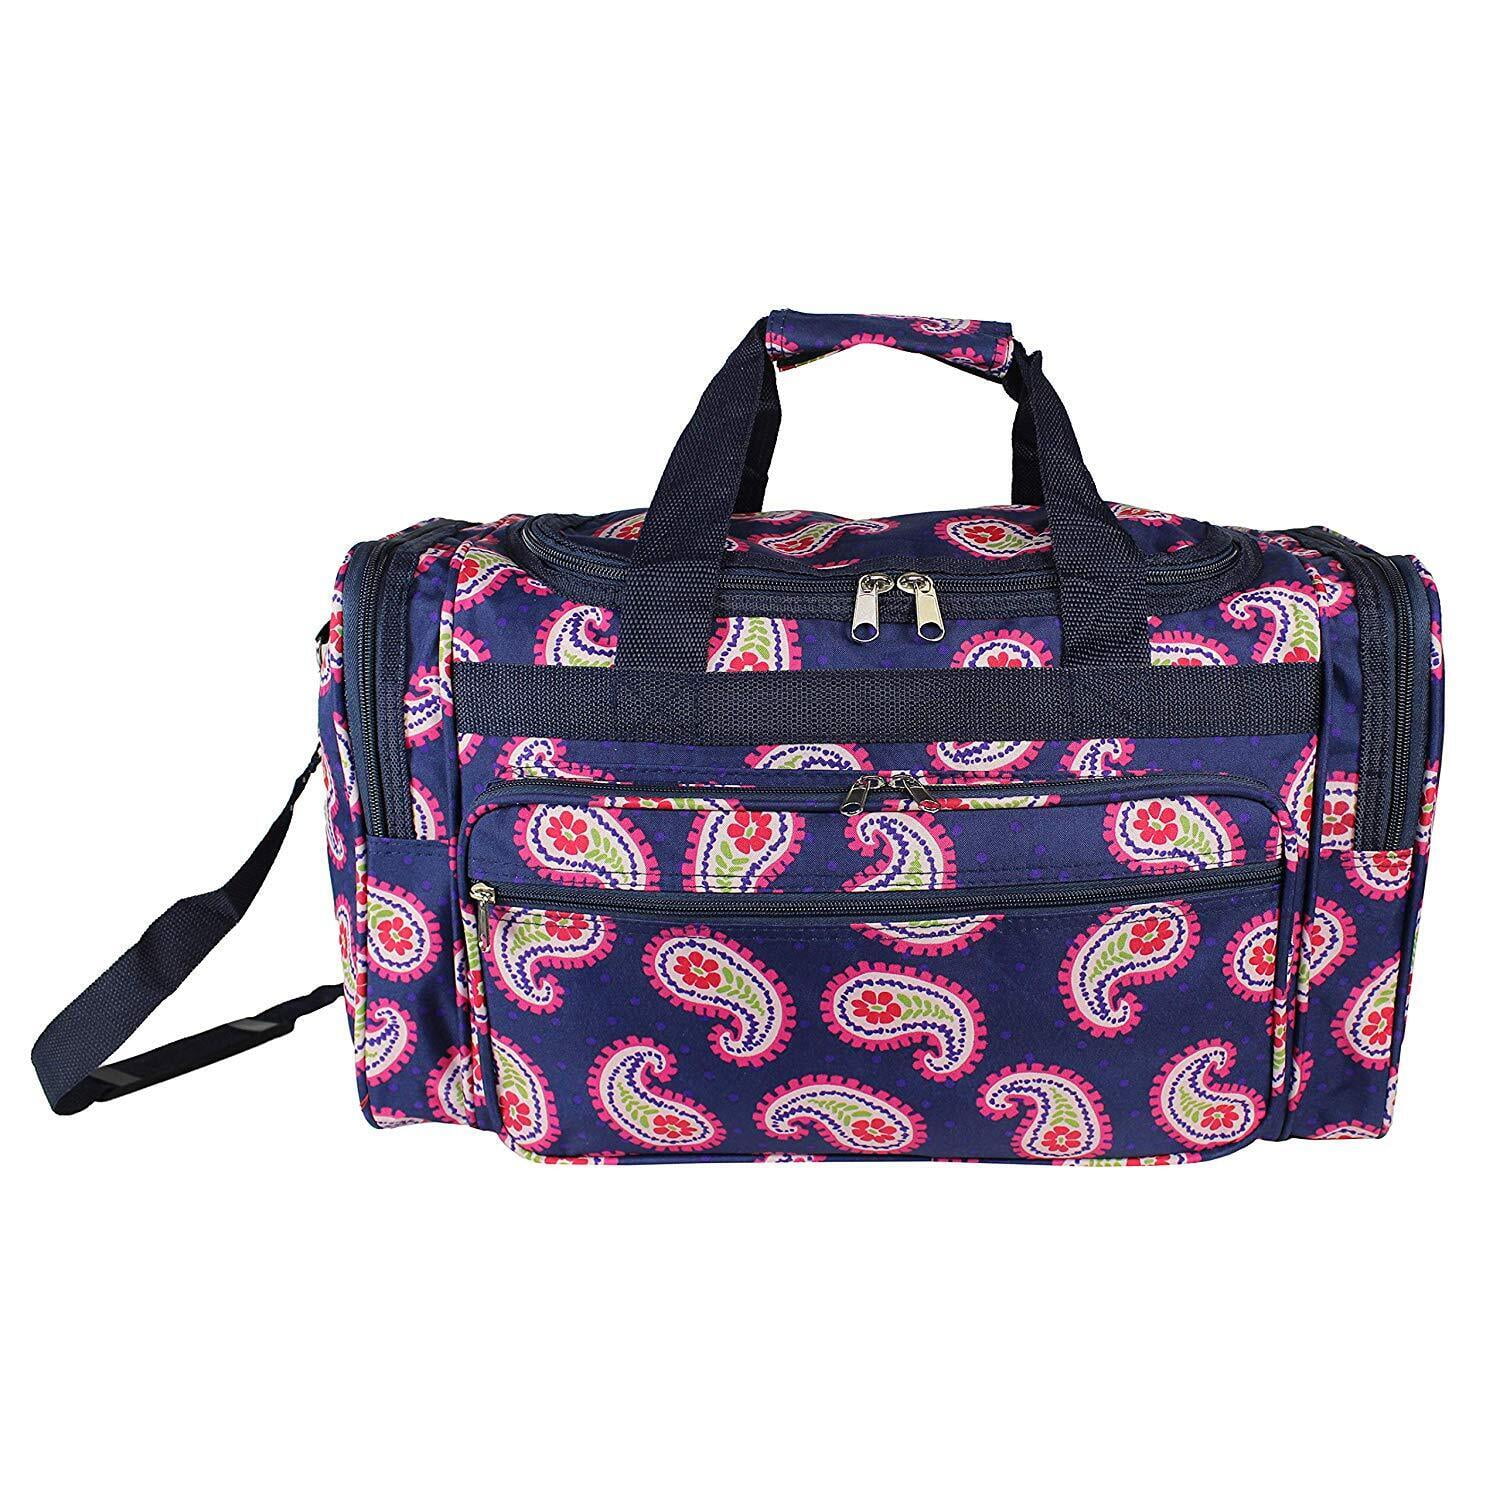 World Traveler 22-Inch Carry-On Duffel Bag - Floral Paisley - Walmart.com